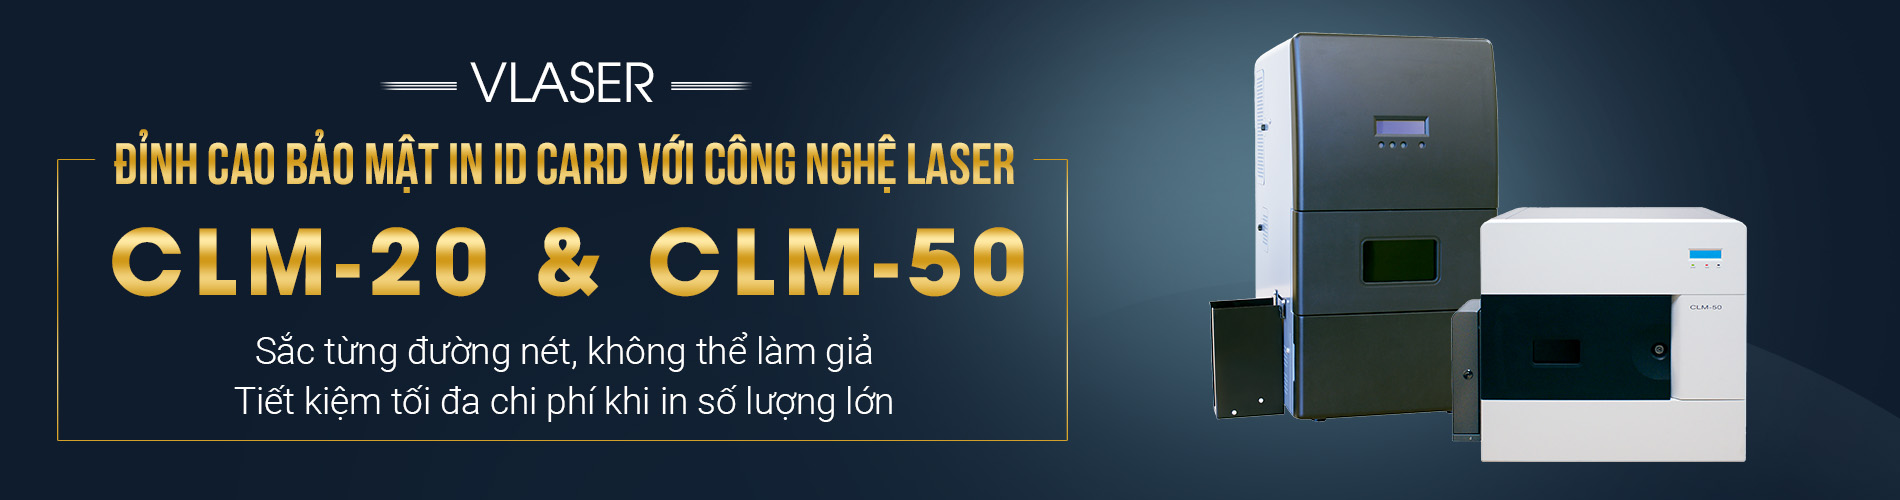 banner_laser_id_card1_0